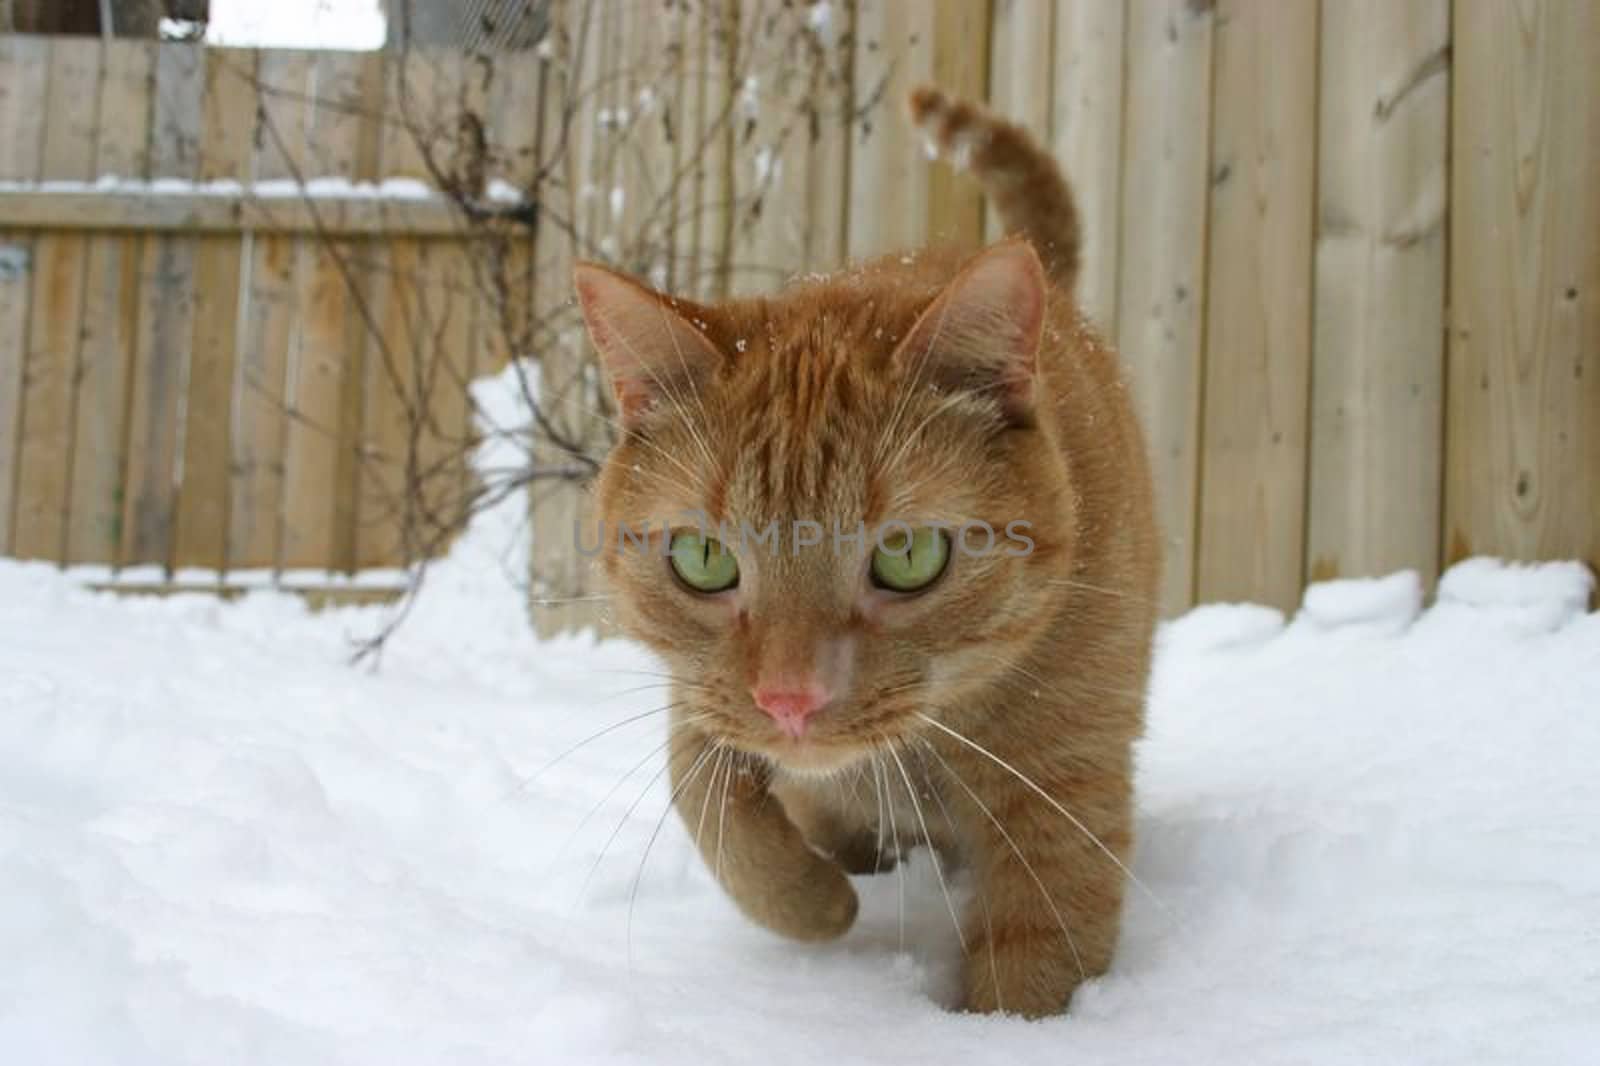 The powerful feline hunter stalks its prey through the snow